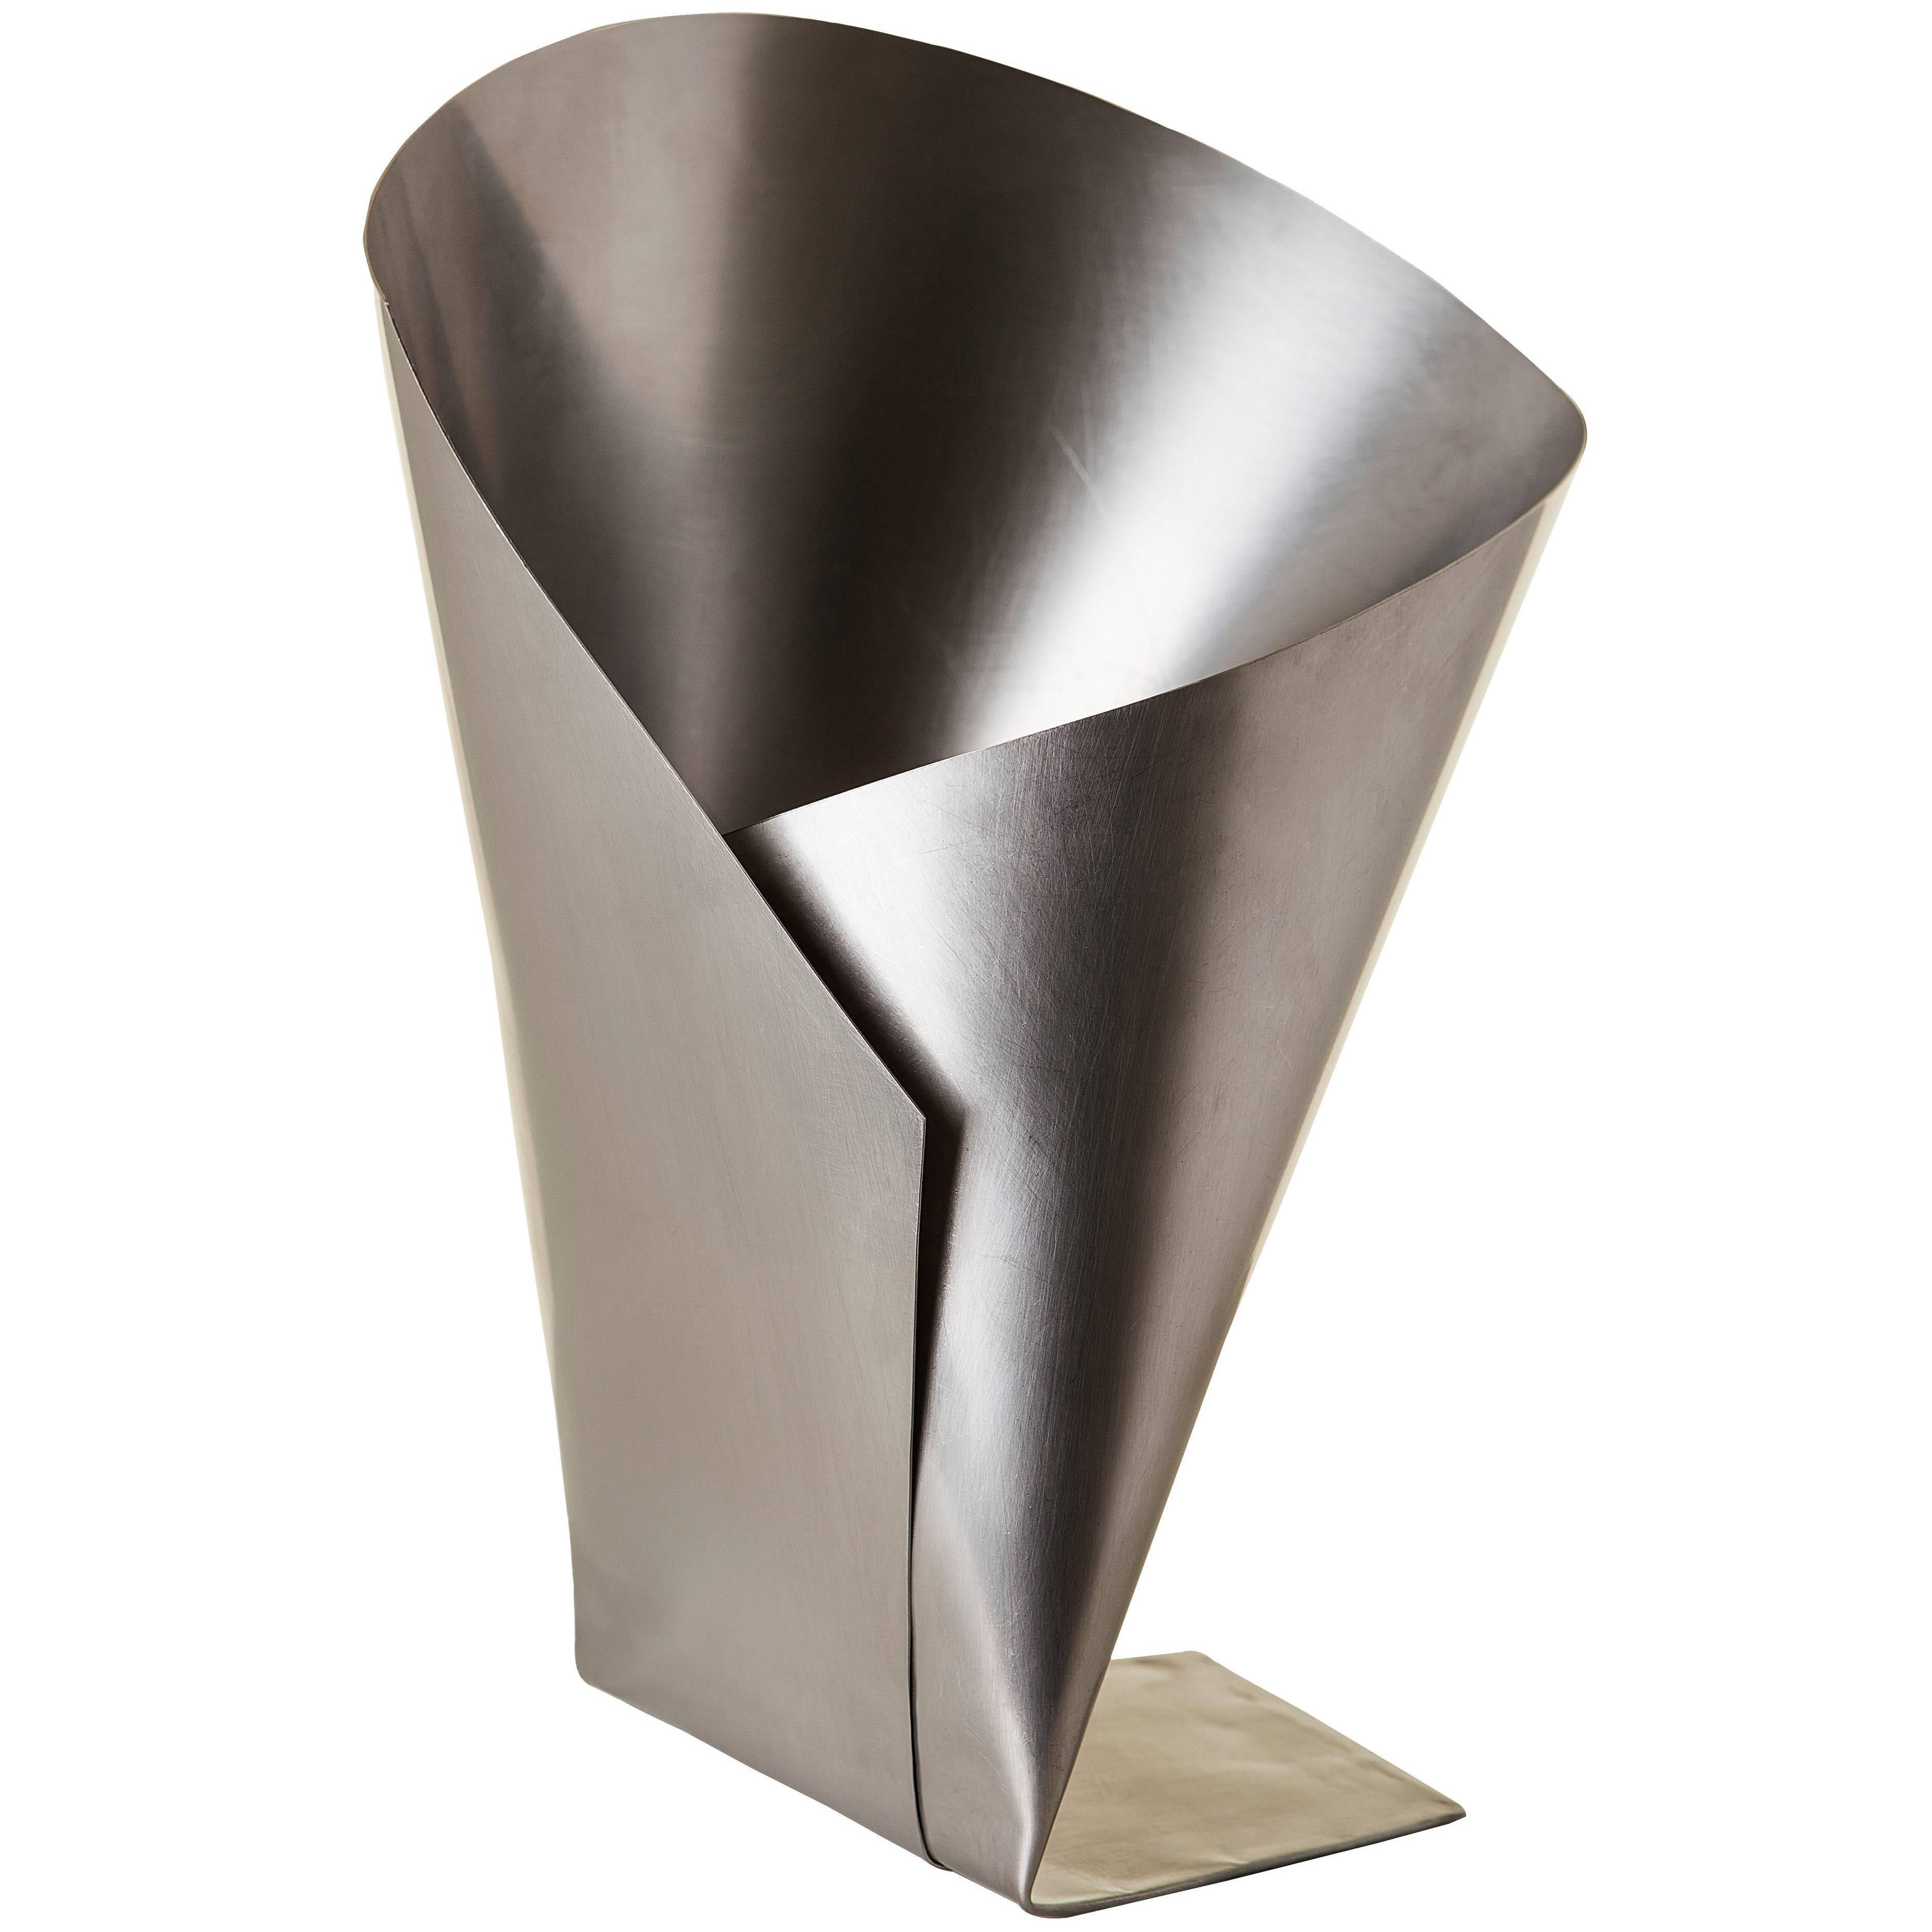 Origami Vase in Stainless Steel, Contemporary Brazilian Style, Rahyja Afrange